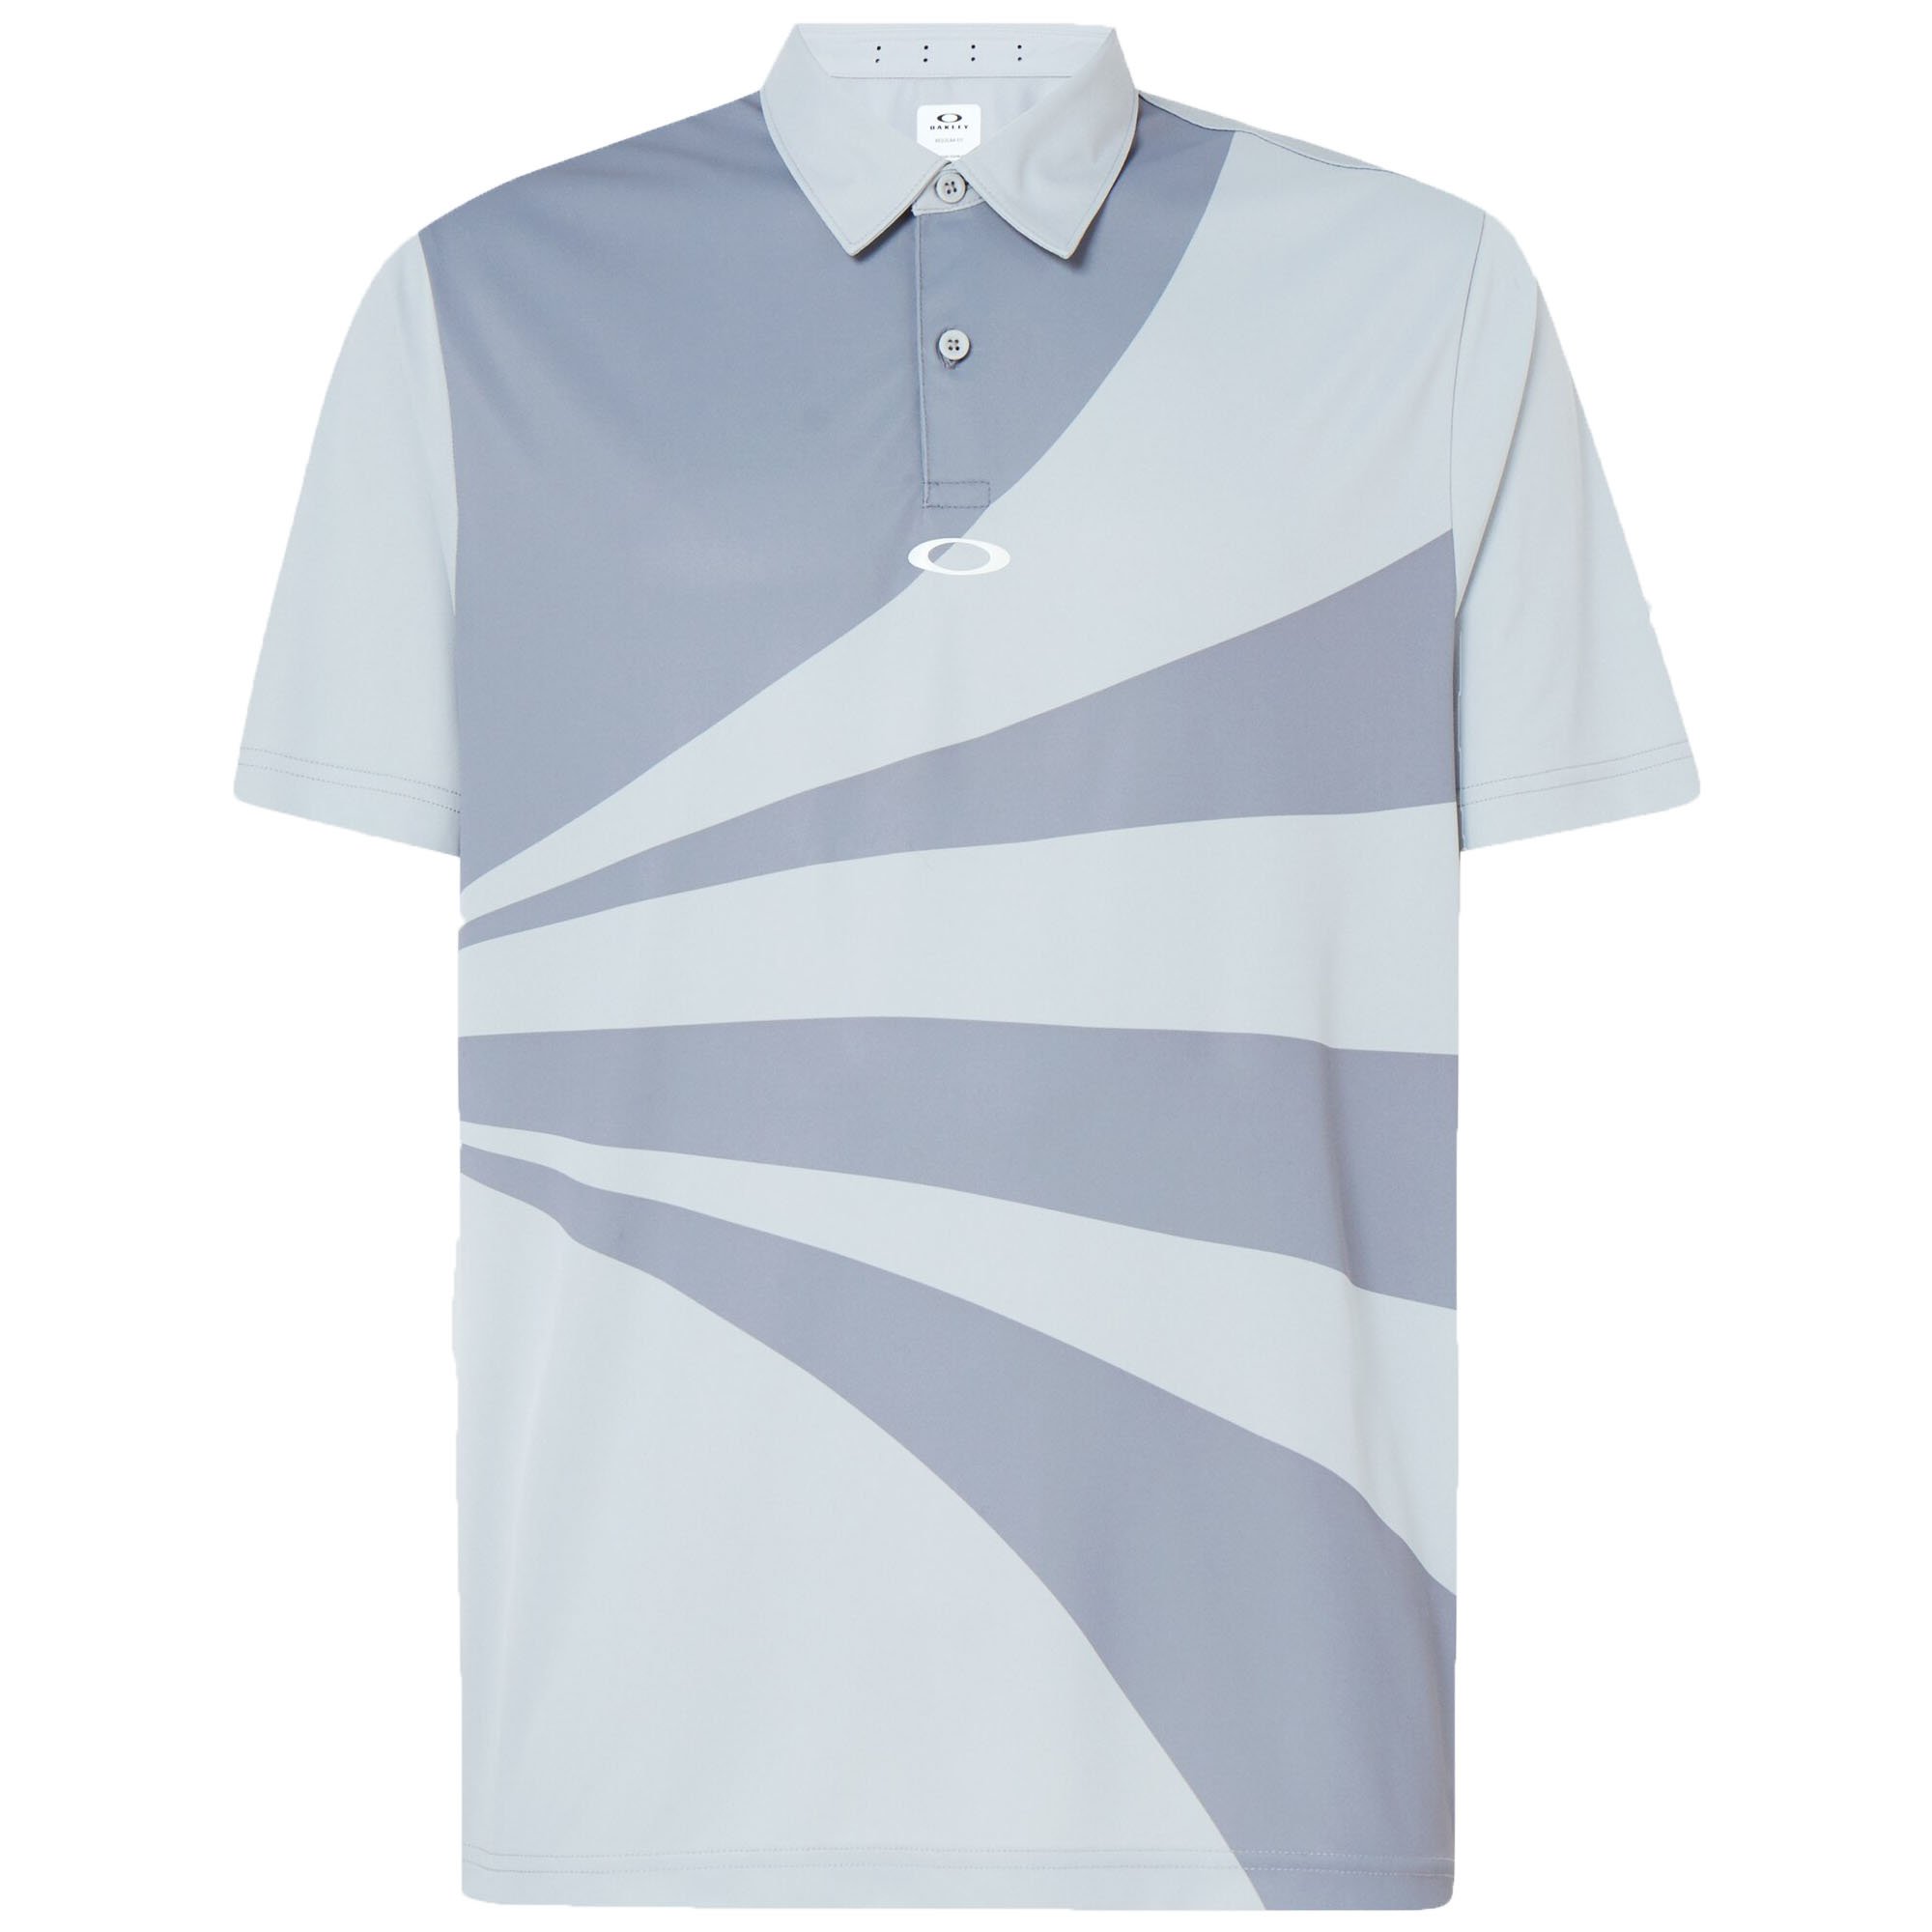 Oriëntatiepunt Induceren waarom Oakley Golf Geometric Swing Men's Polo Shirt - Pick Size & Color! | eBay